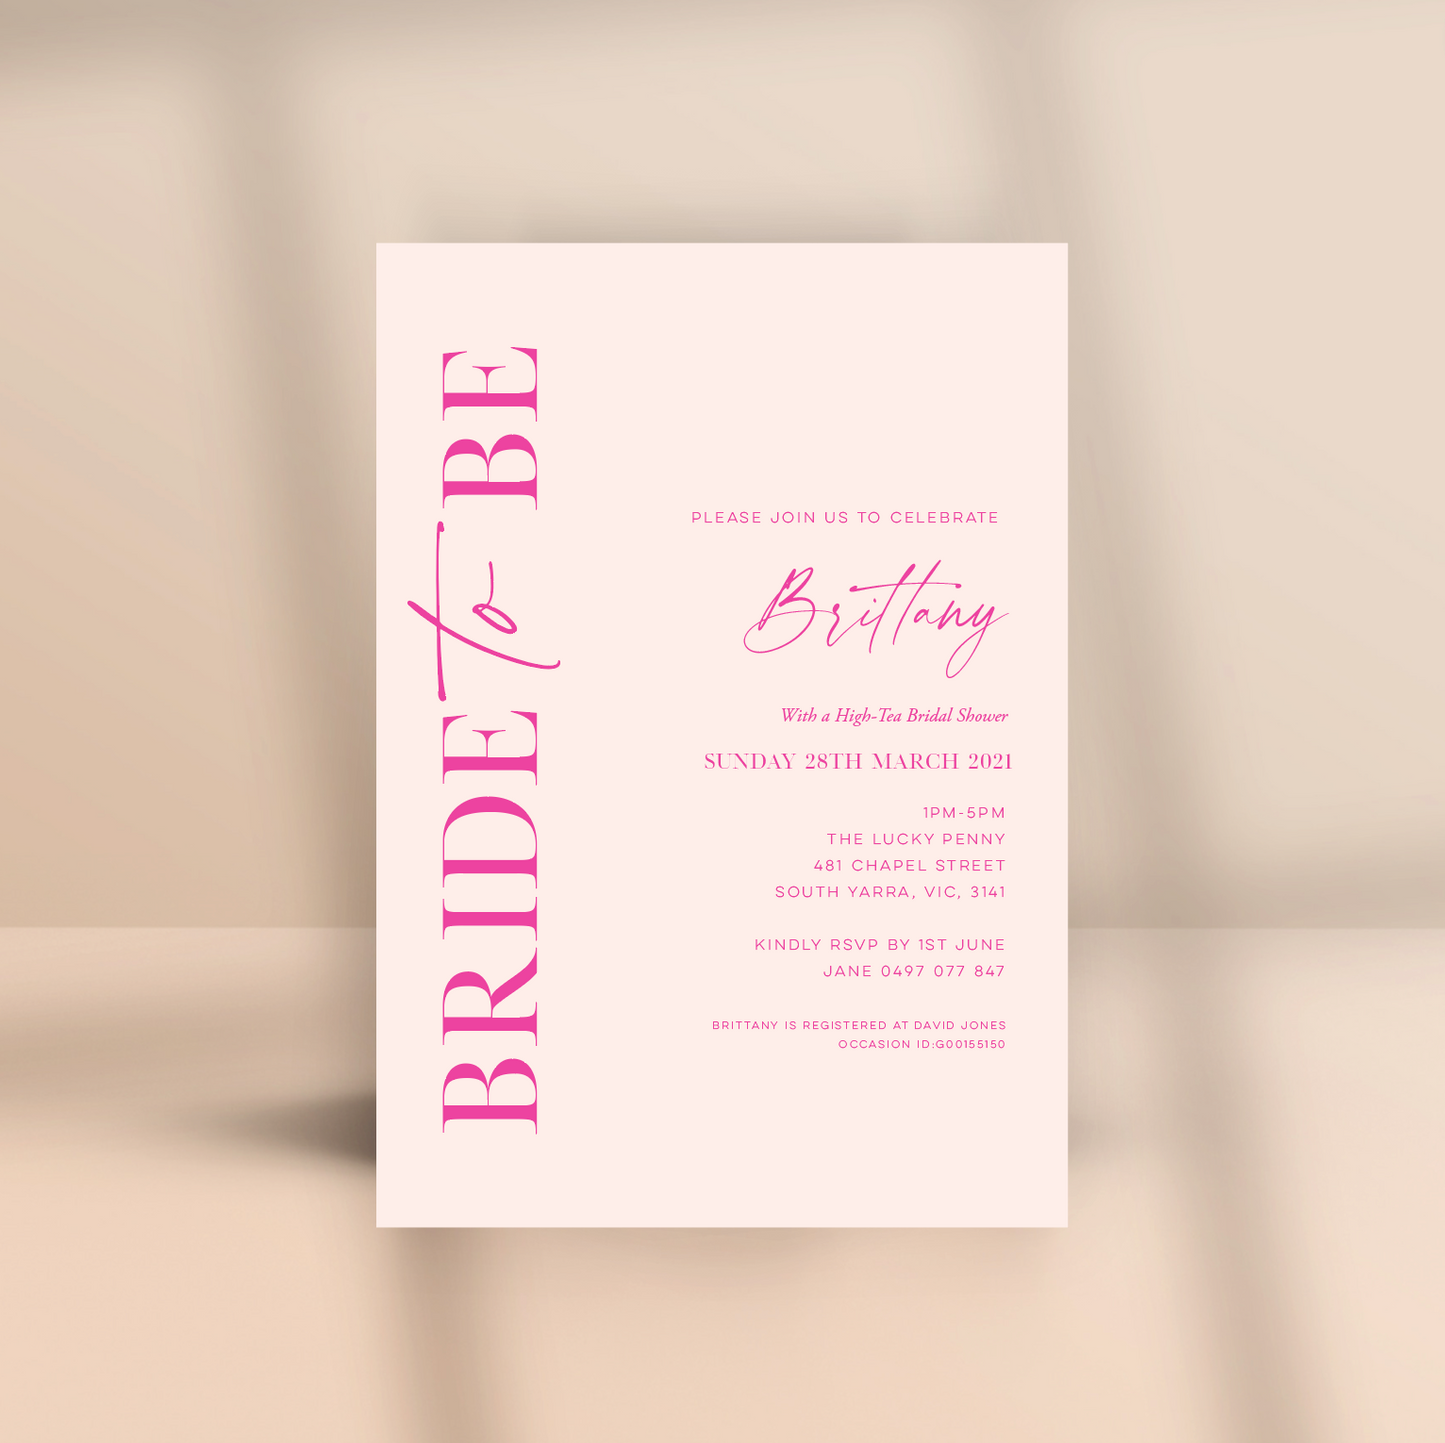 'Brittany' Bridal Shower Invitation